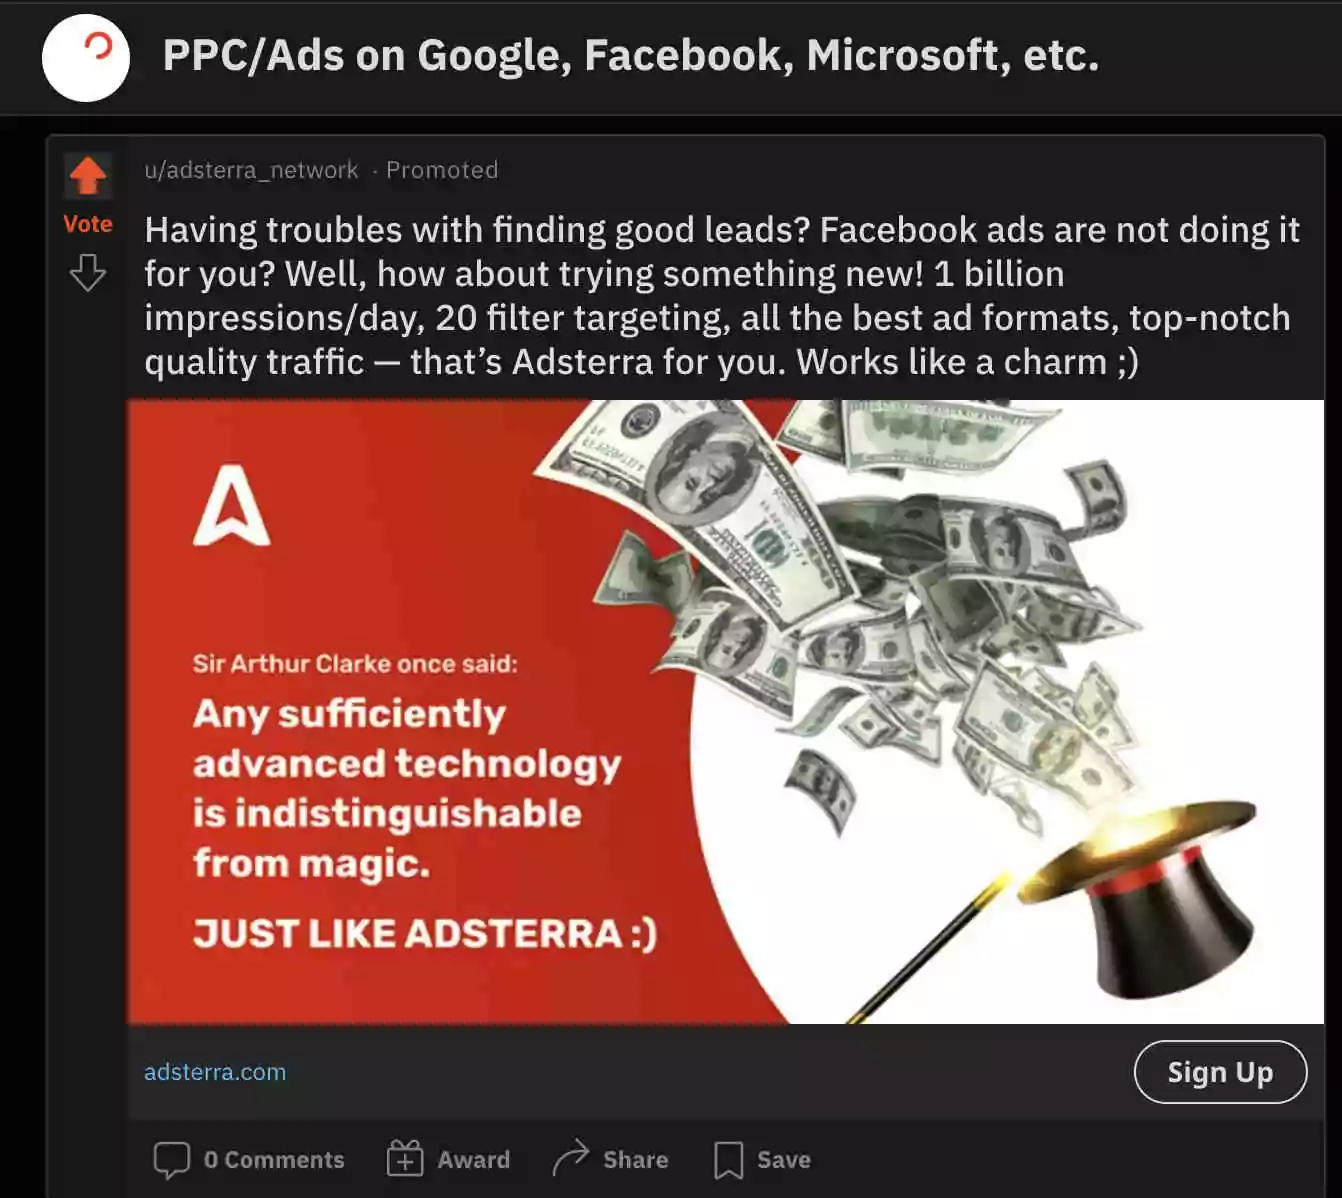 Reddit ads